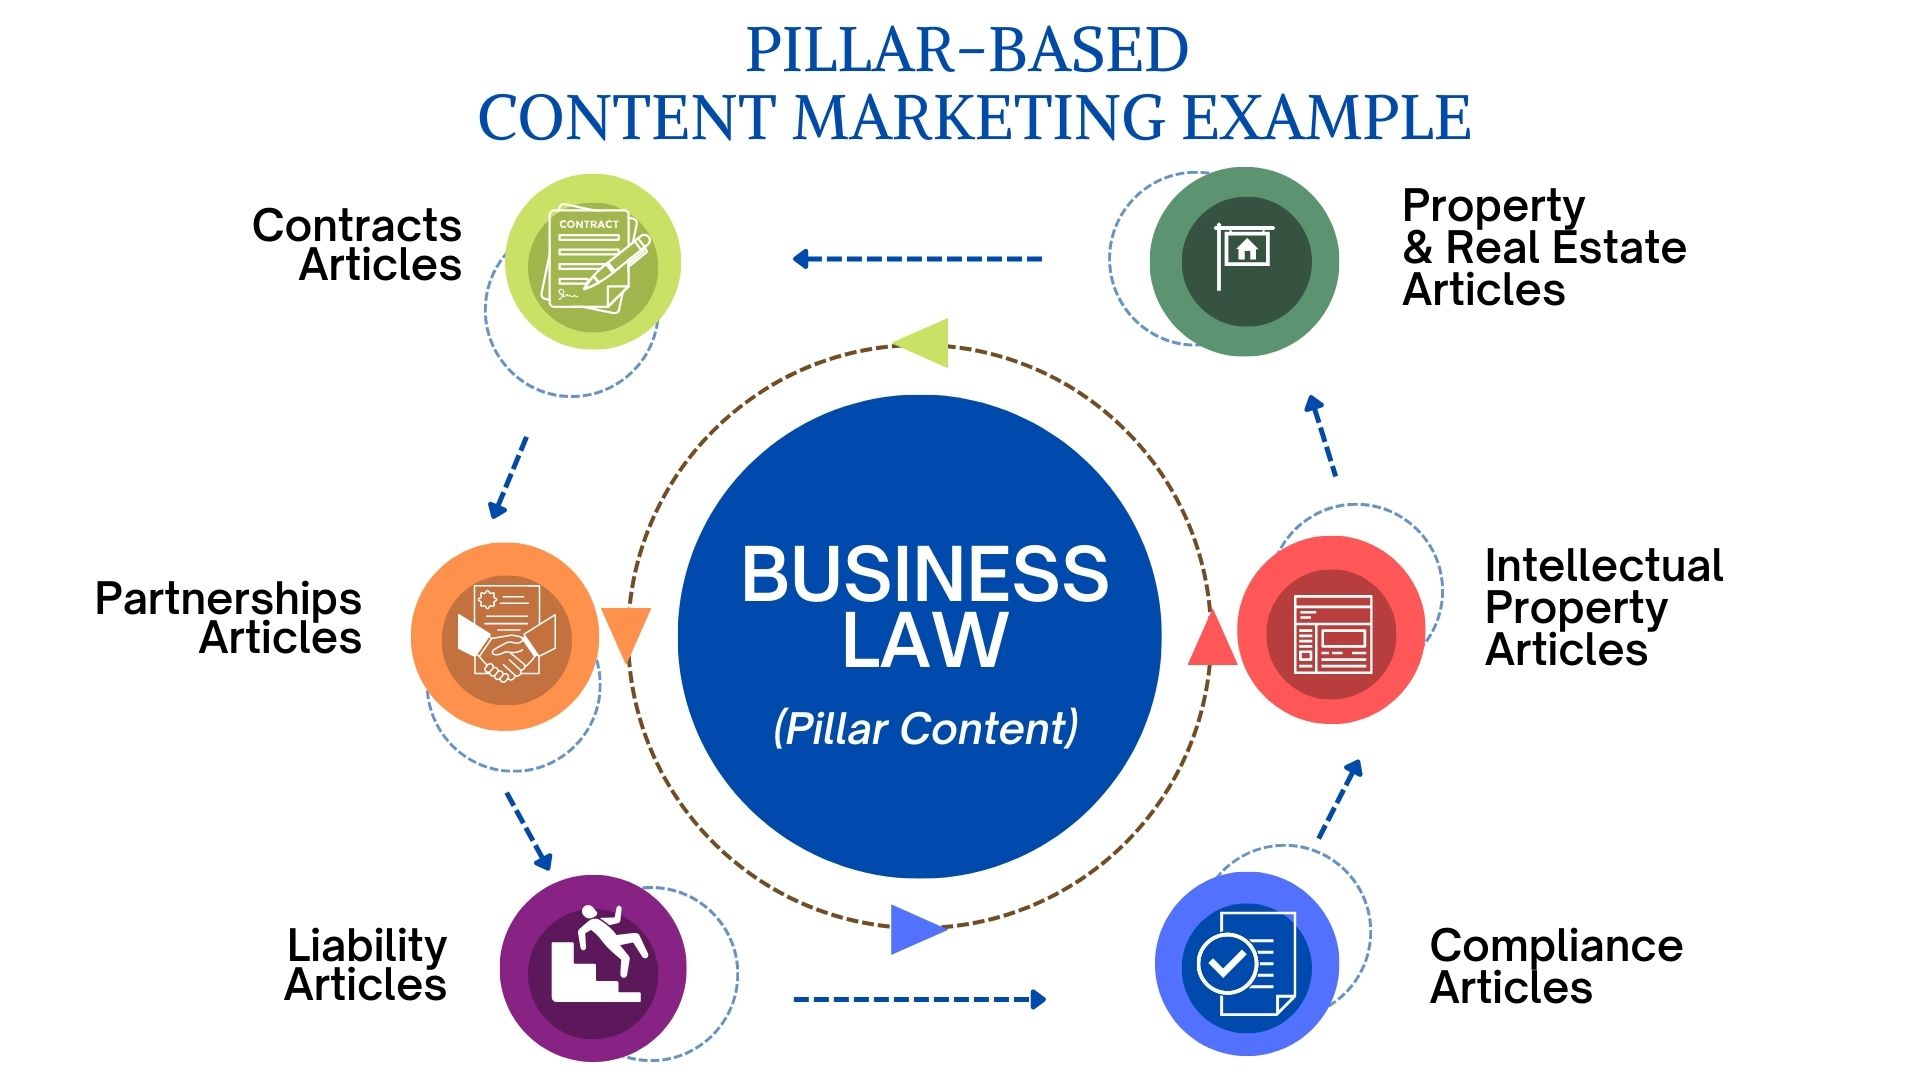 How Does Pillar-based Marketing Work?